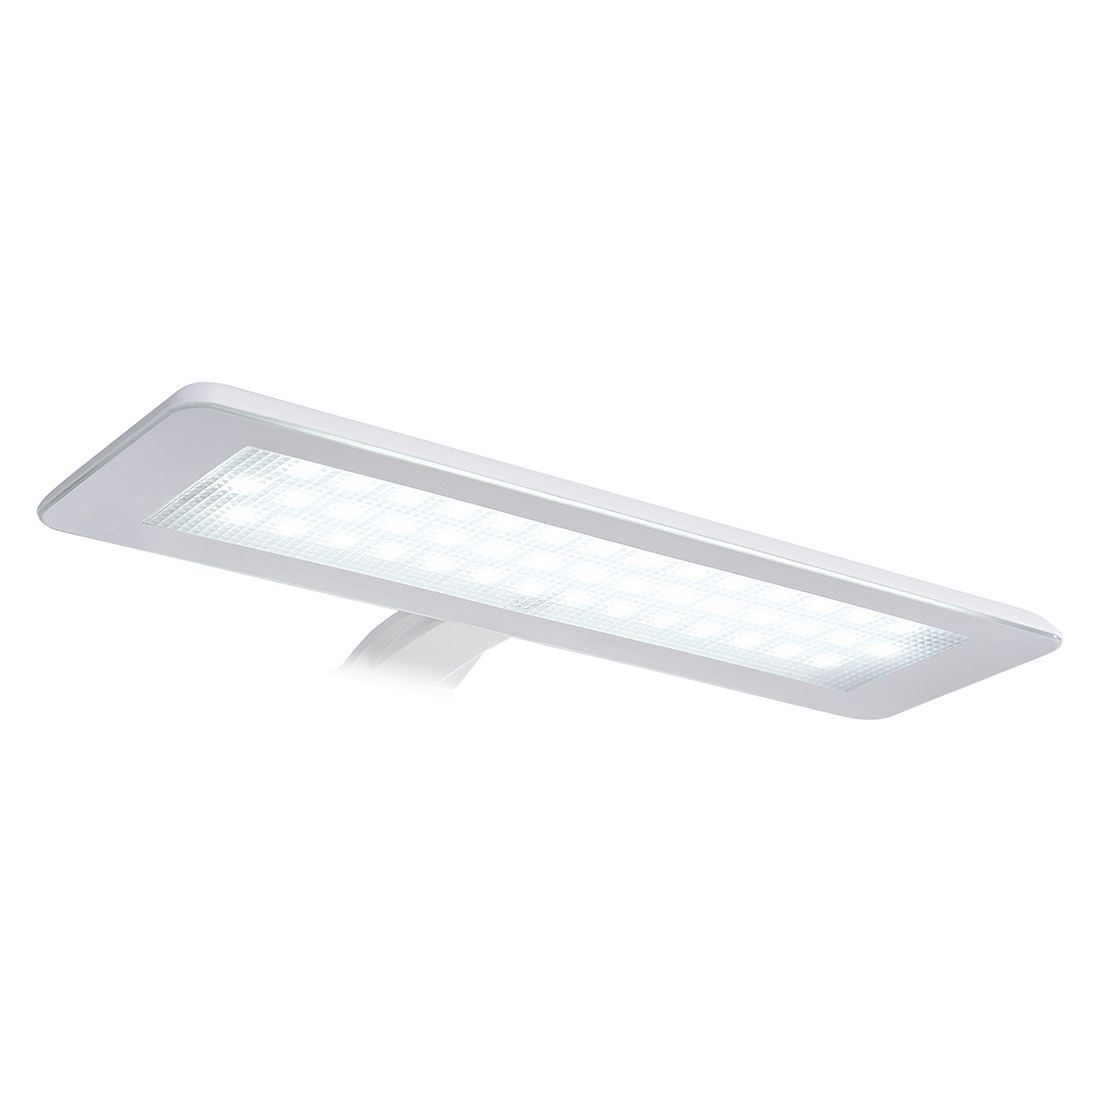 Pelipal LED-Aufsatzleuchte 30x10,7x5,4cm Weiß